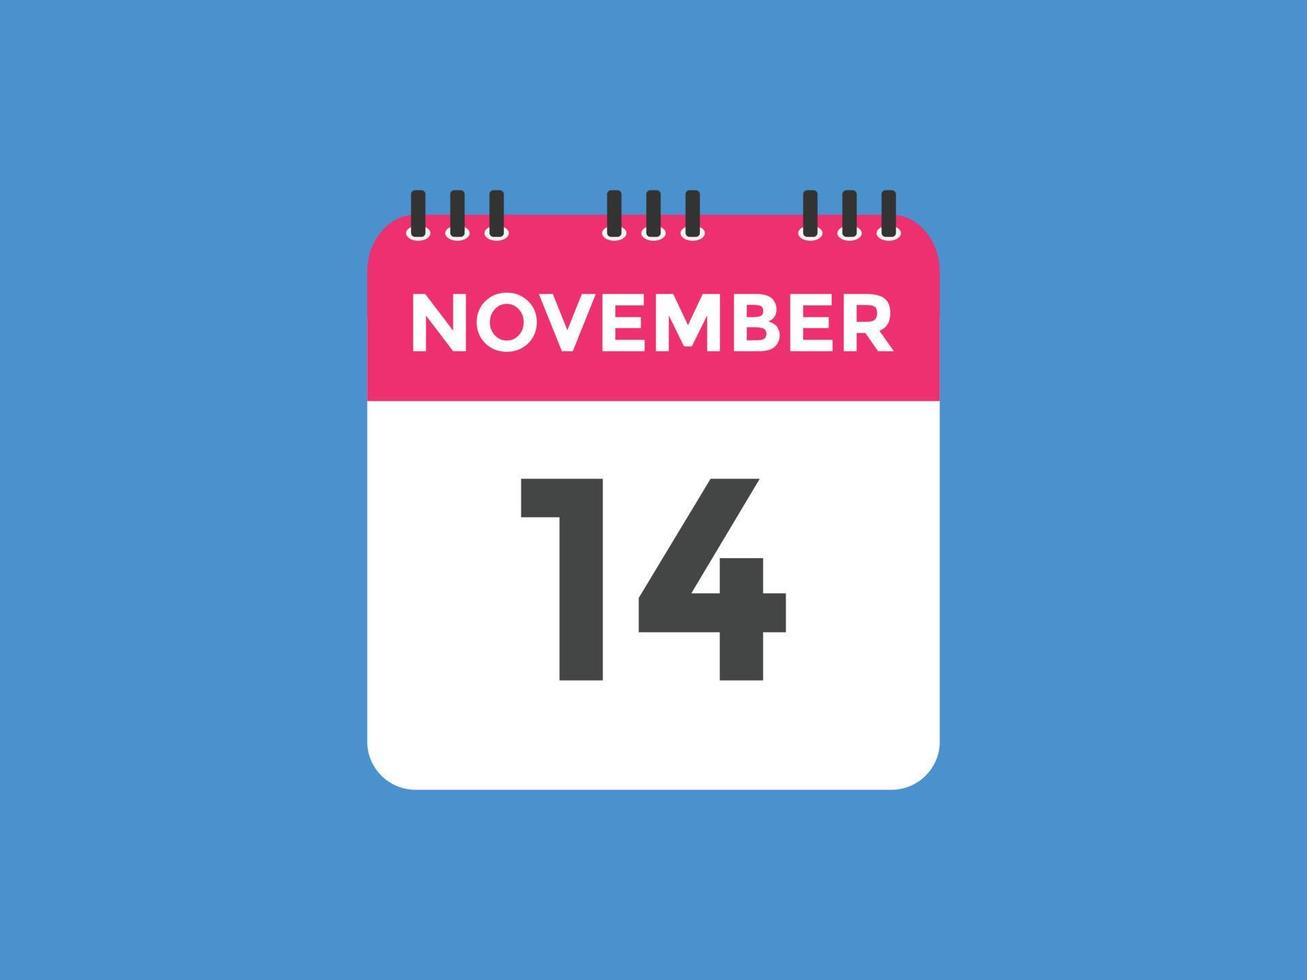 november 14 kalender herinnering. 14e november dagelijks kalender icoon sjabloon. kalender 14e november icoon ontwerp sjabloon. vector illustratie